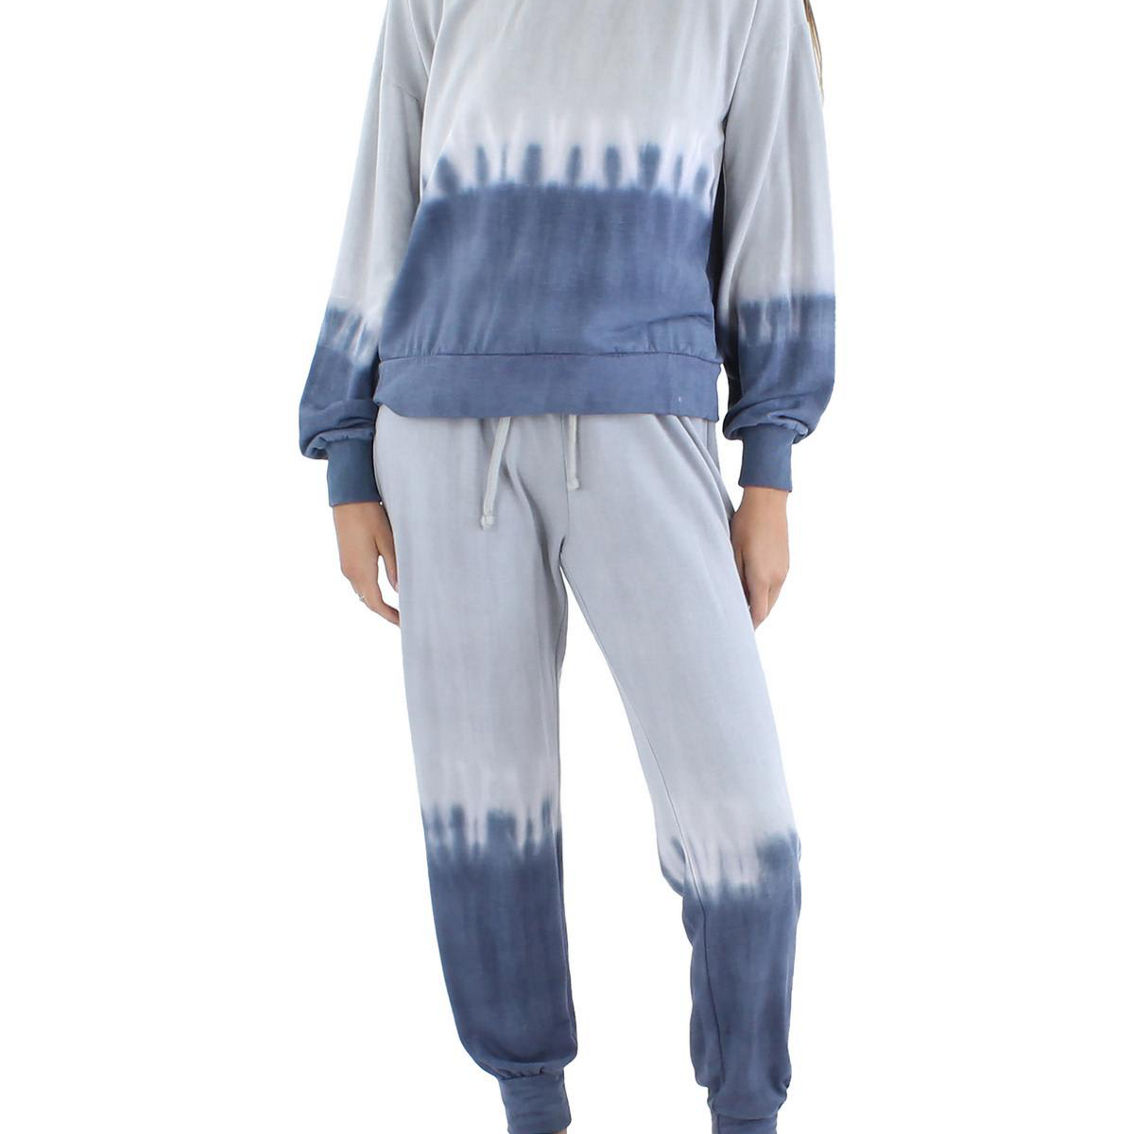 Womens Tie-Dye Fleece Lined Jogger Pants - Image 3 of 3